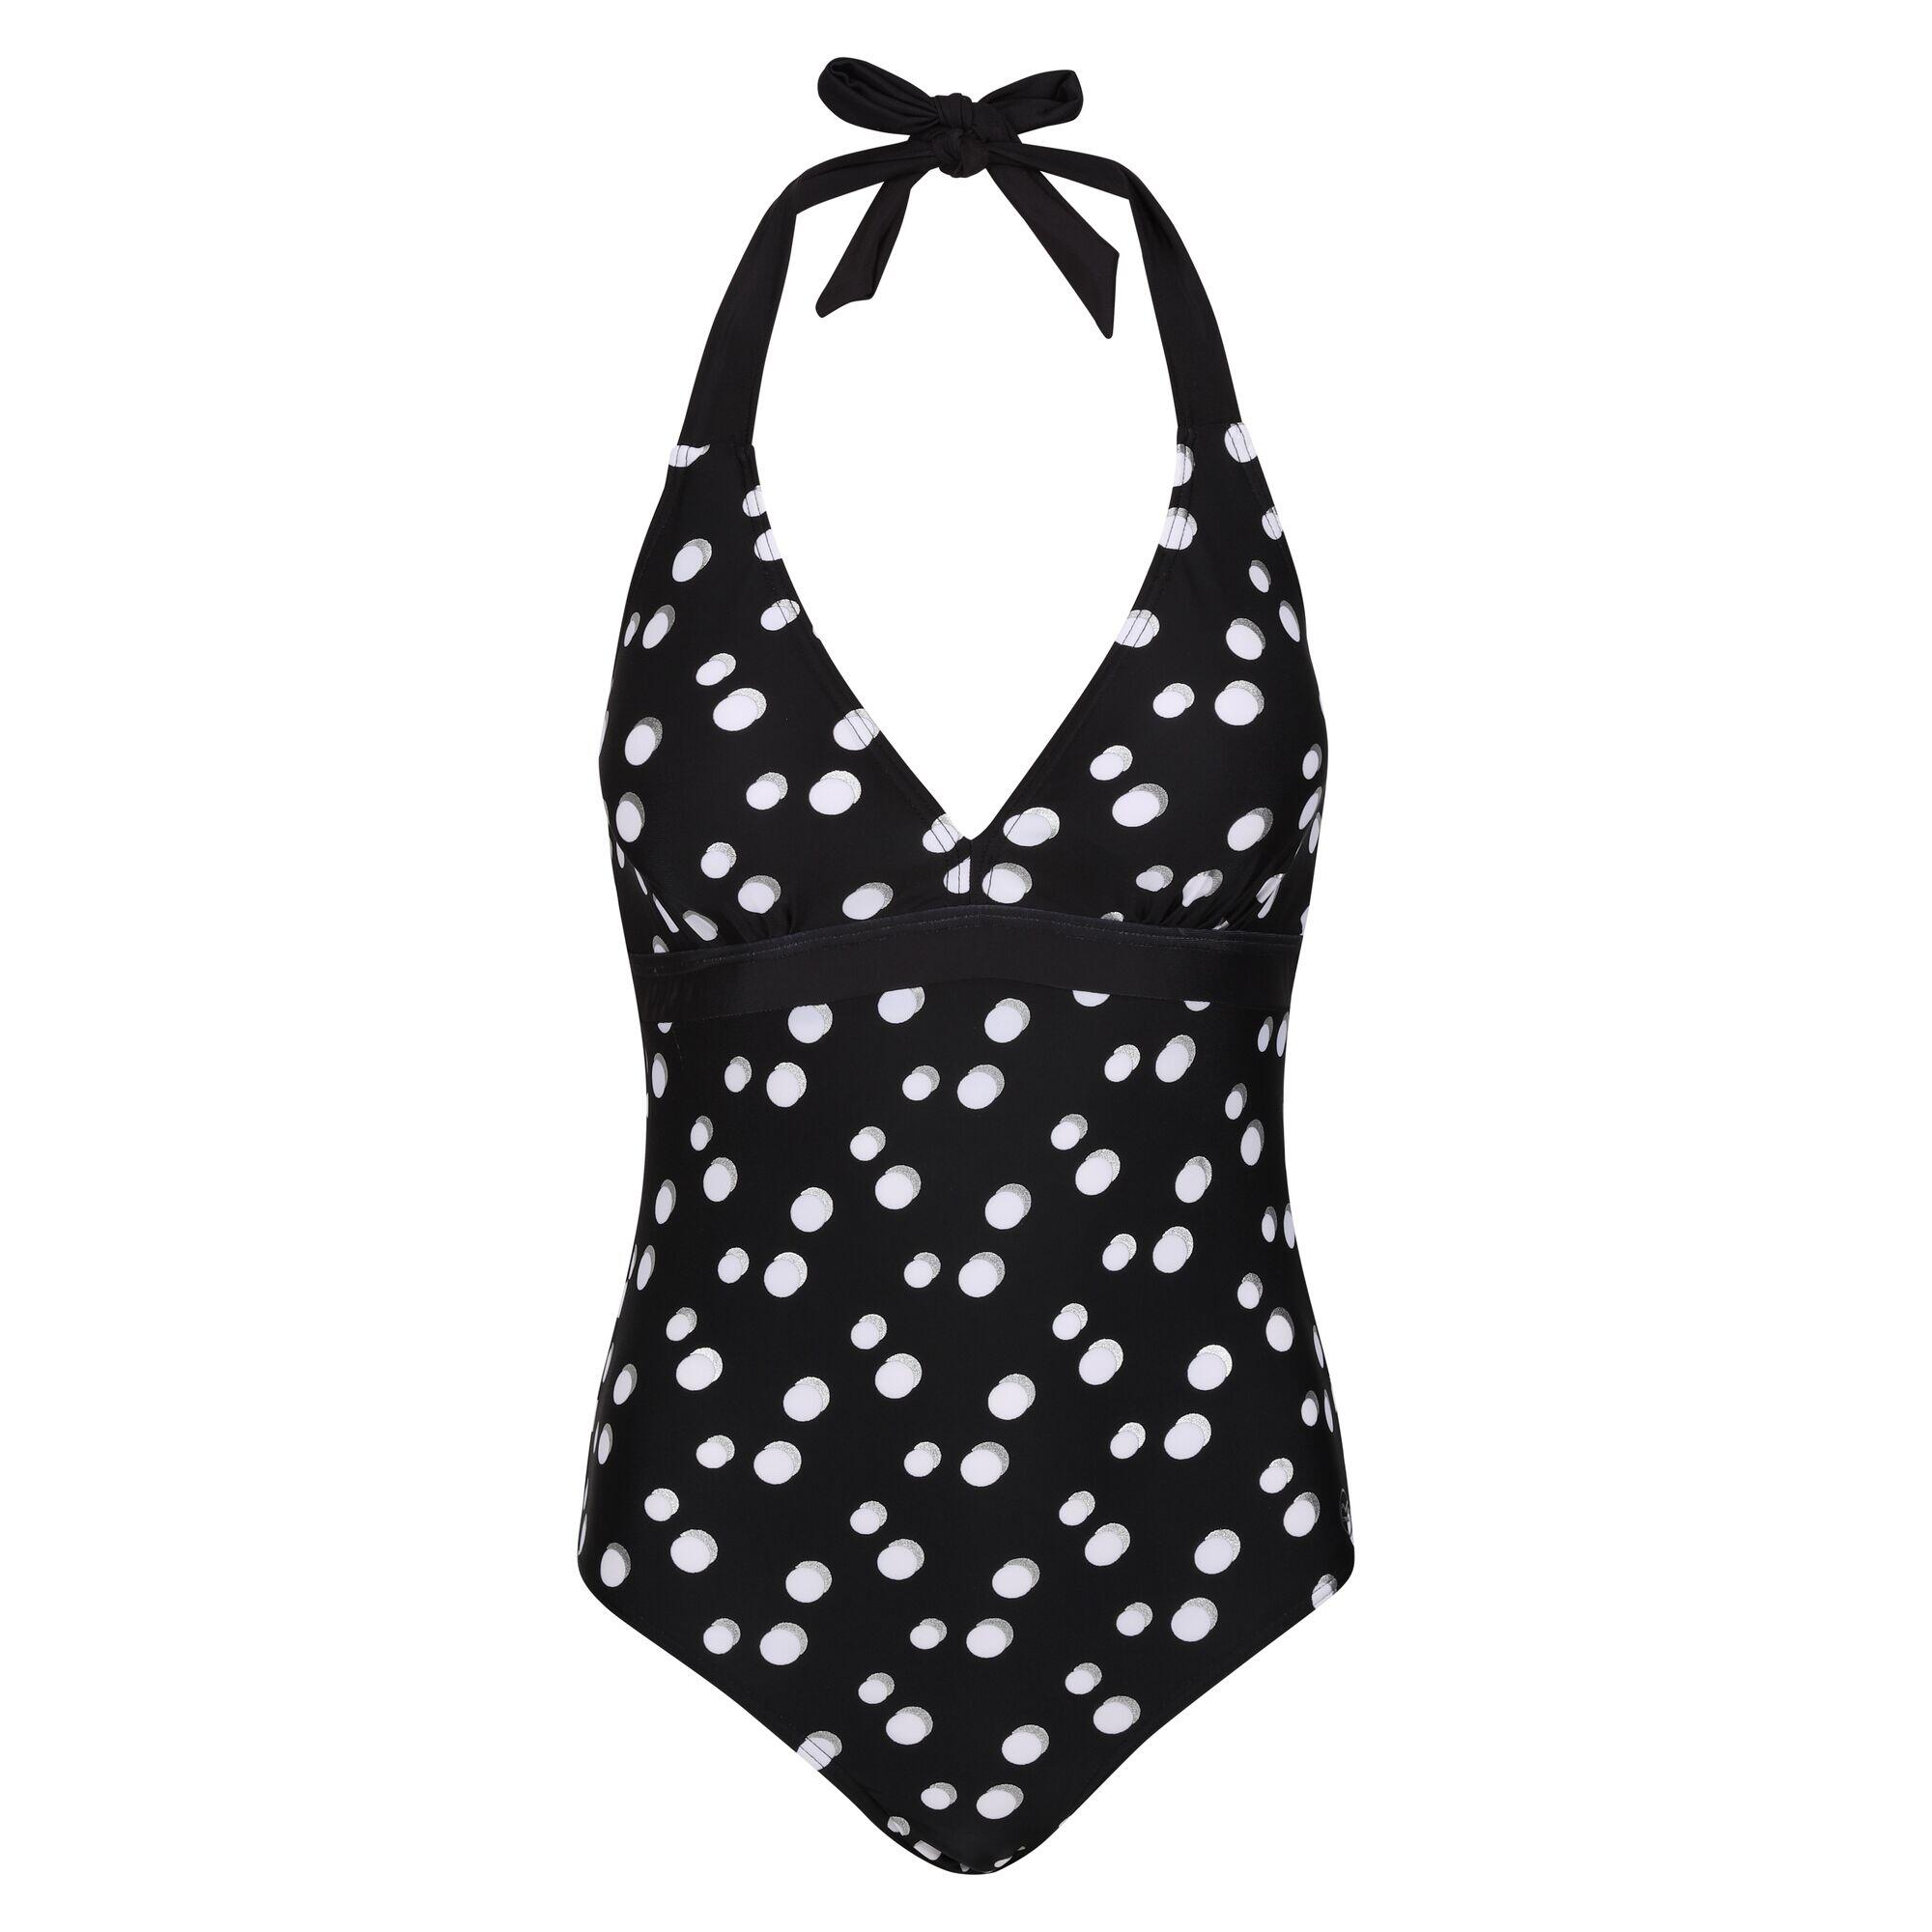 REGATTA Womens/Ladies Flavia Polka Dot One Piece Swimsuit (Black/White)